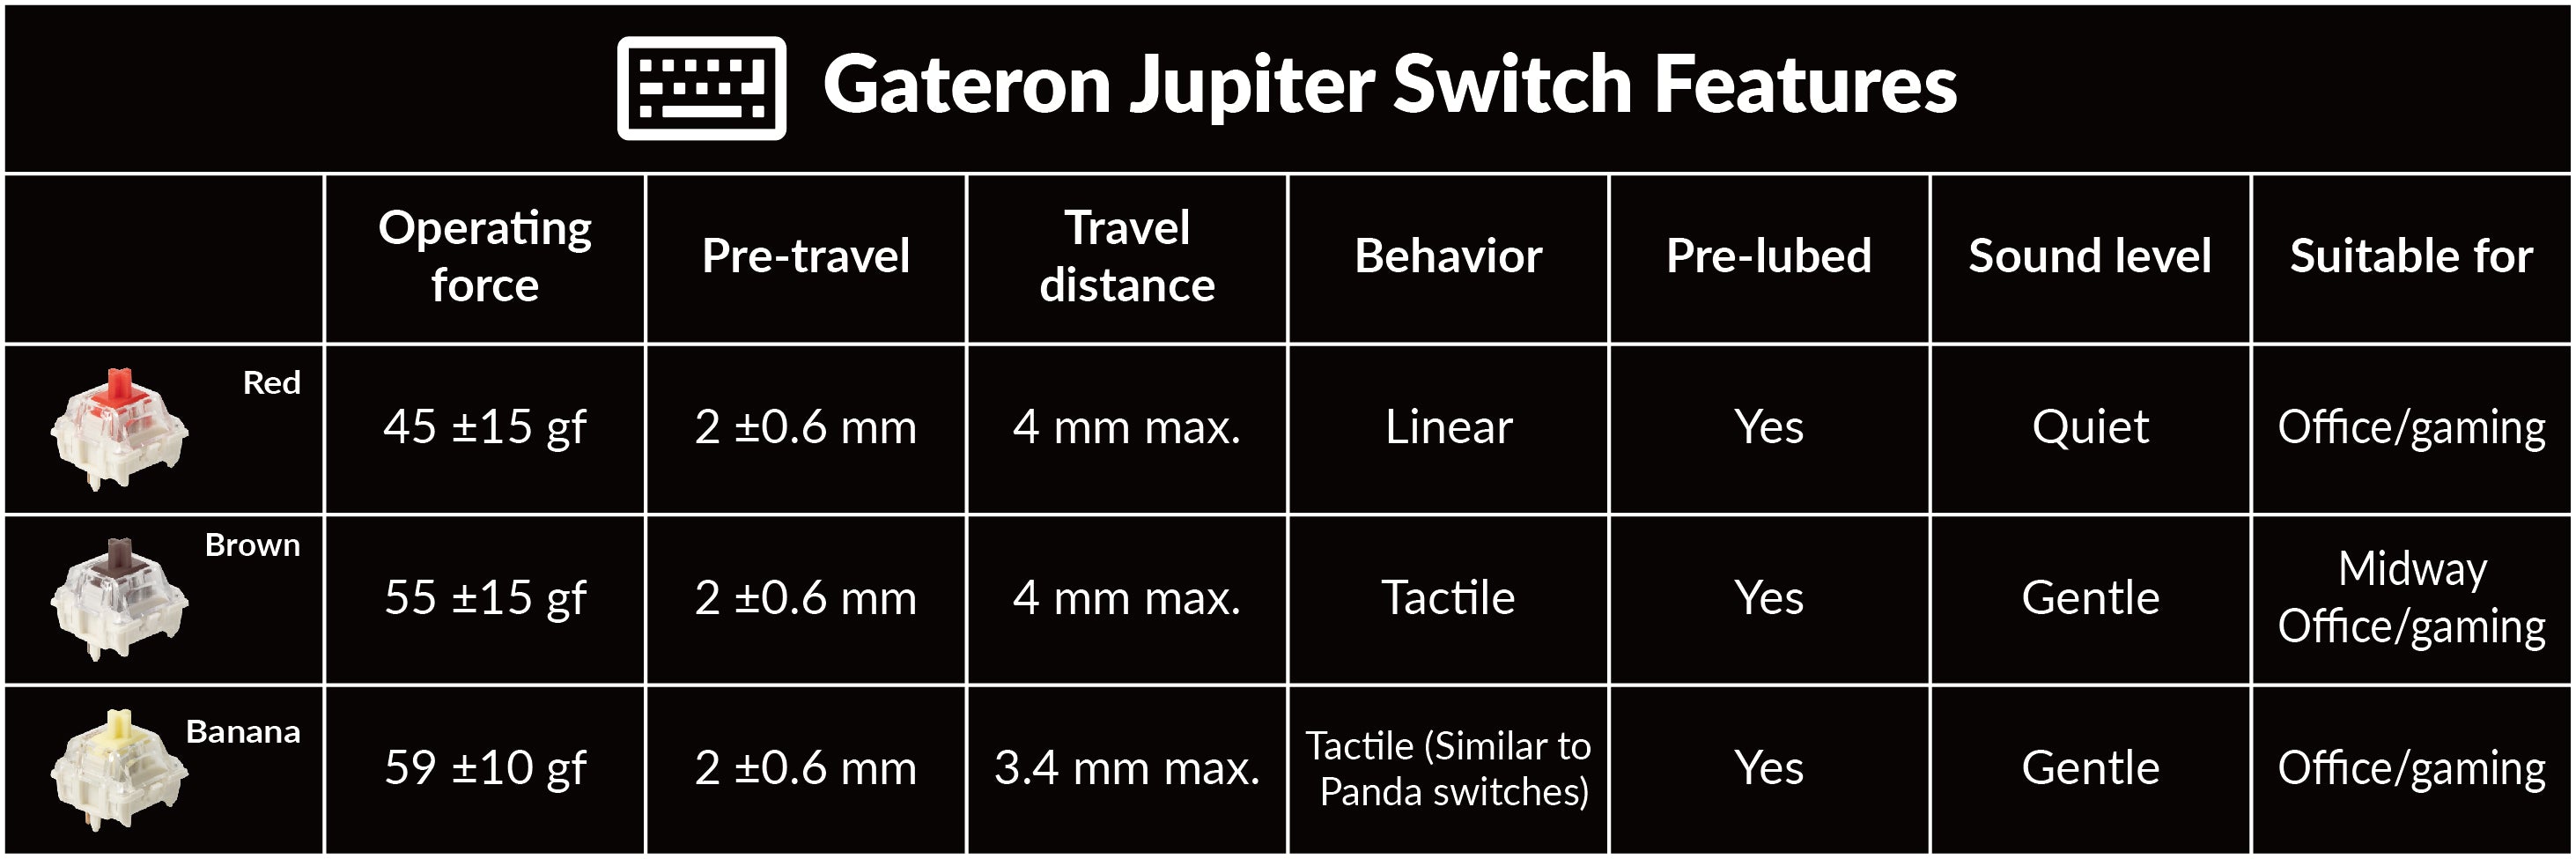 keychron-gateron-jupiter-mx-mechanical-switch-red-brown-banana__PID:db7a2300-eba7-4629-b2cf-2f02eca99aea